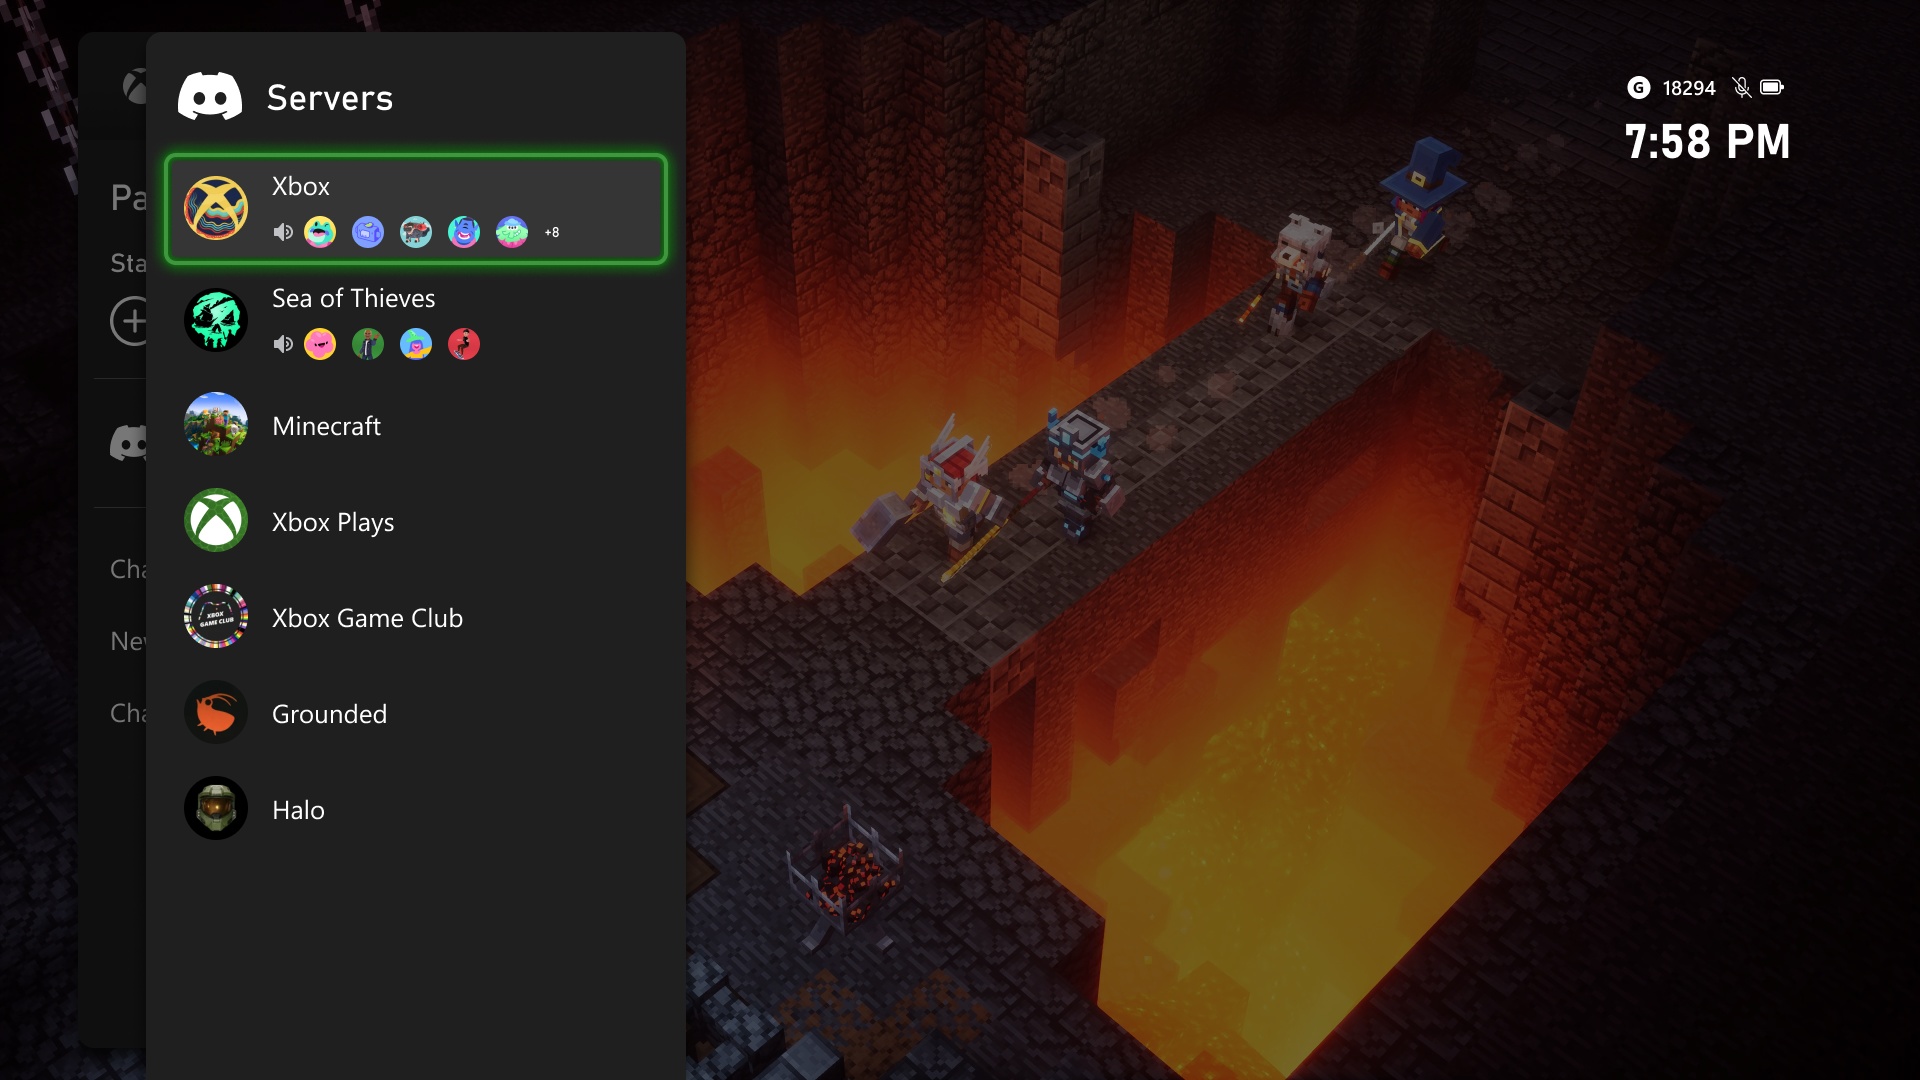 So the Minecraft Discord is full. Any way I can still join? (I